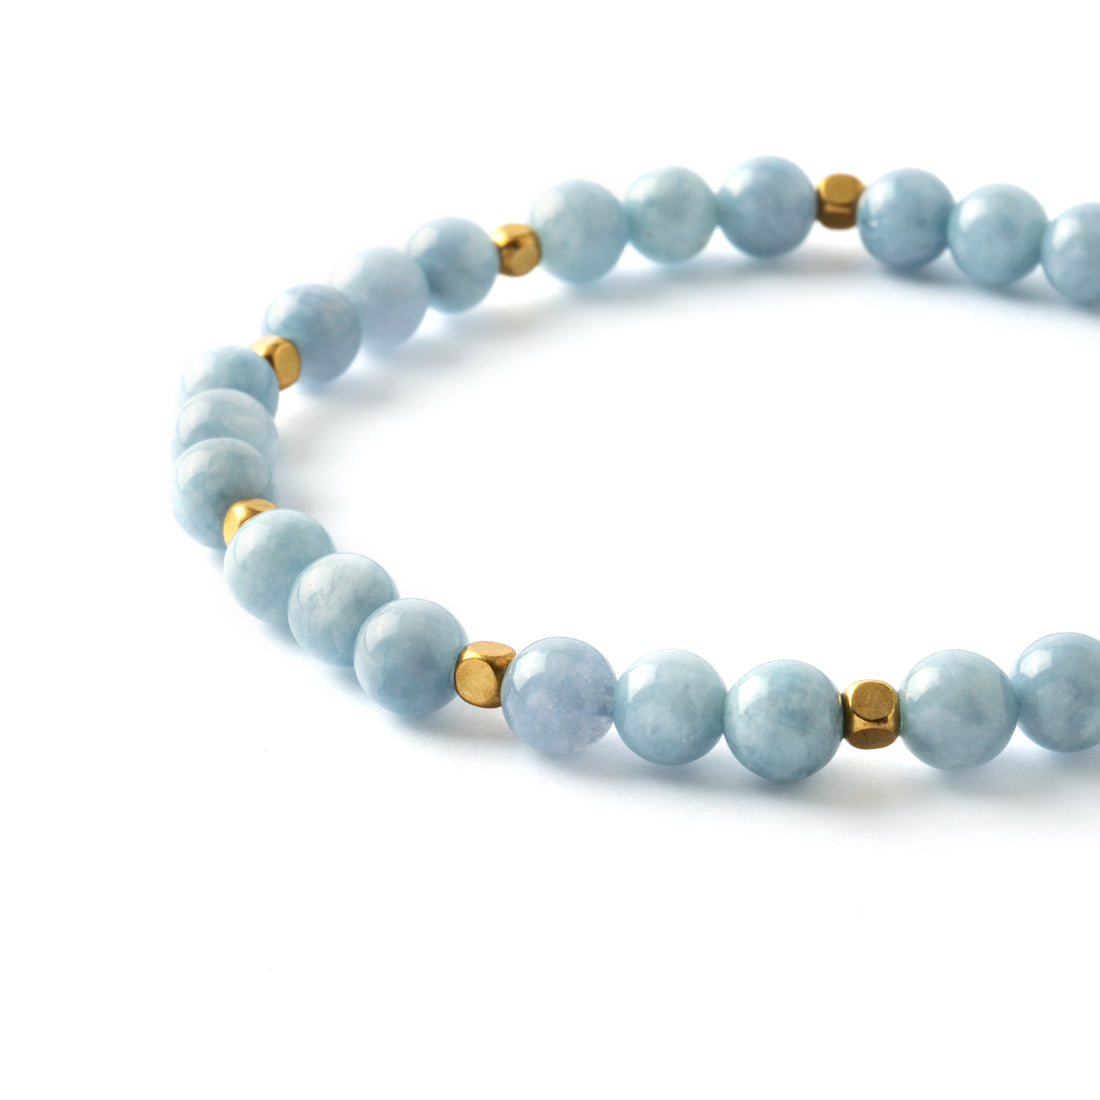 Aquamarine beads bracelet with interlocking petite squared golden brass beads close up view